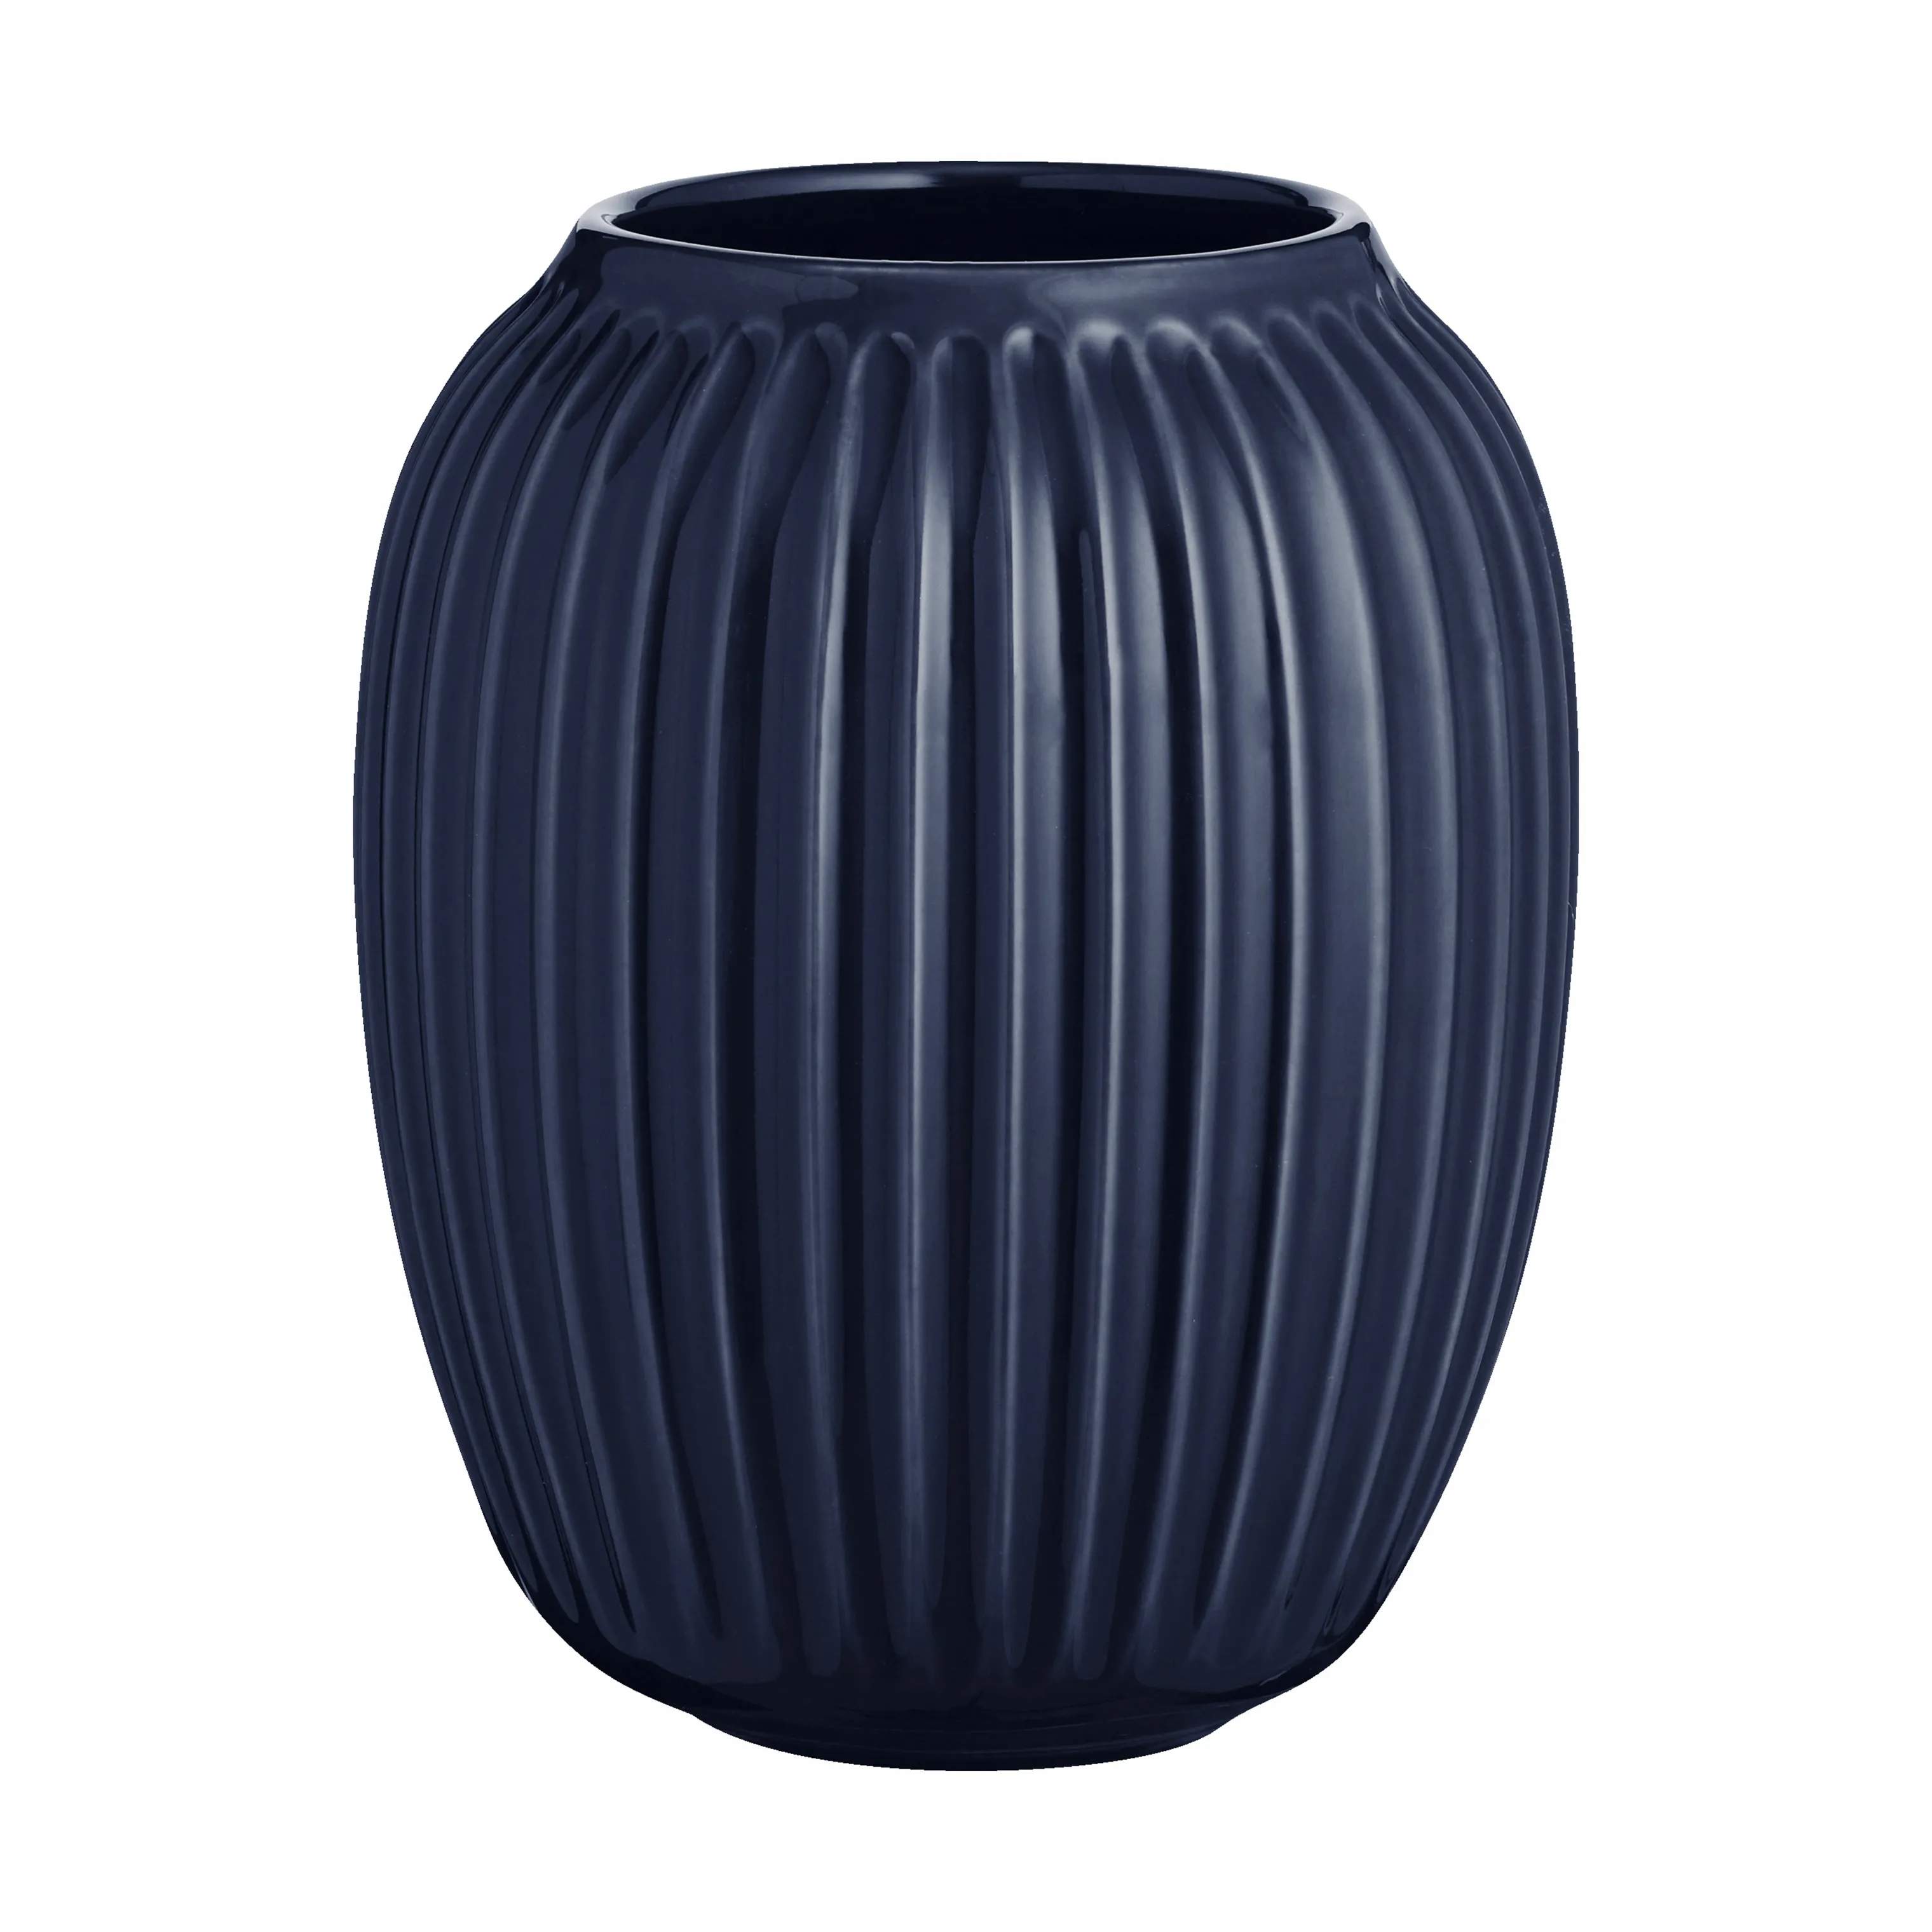 Hammershøi Vase, indigo, large